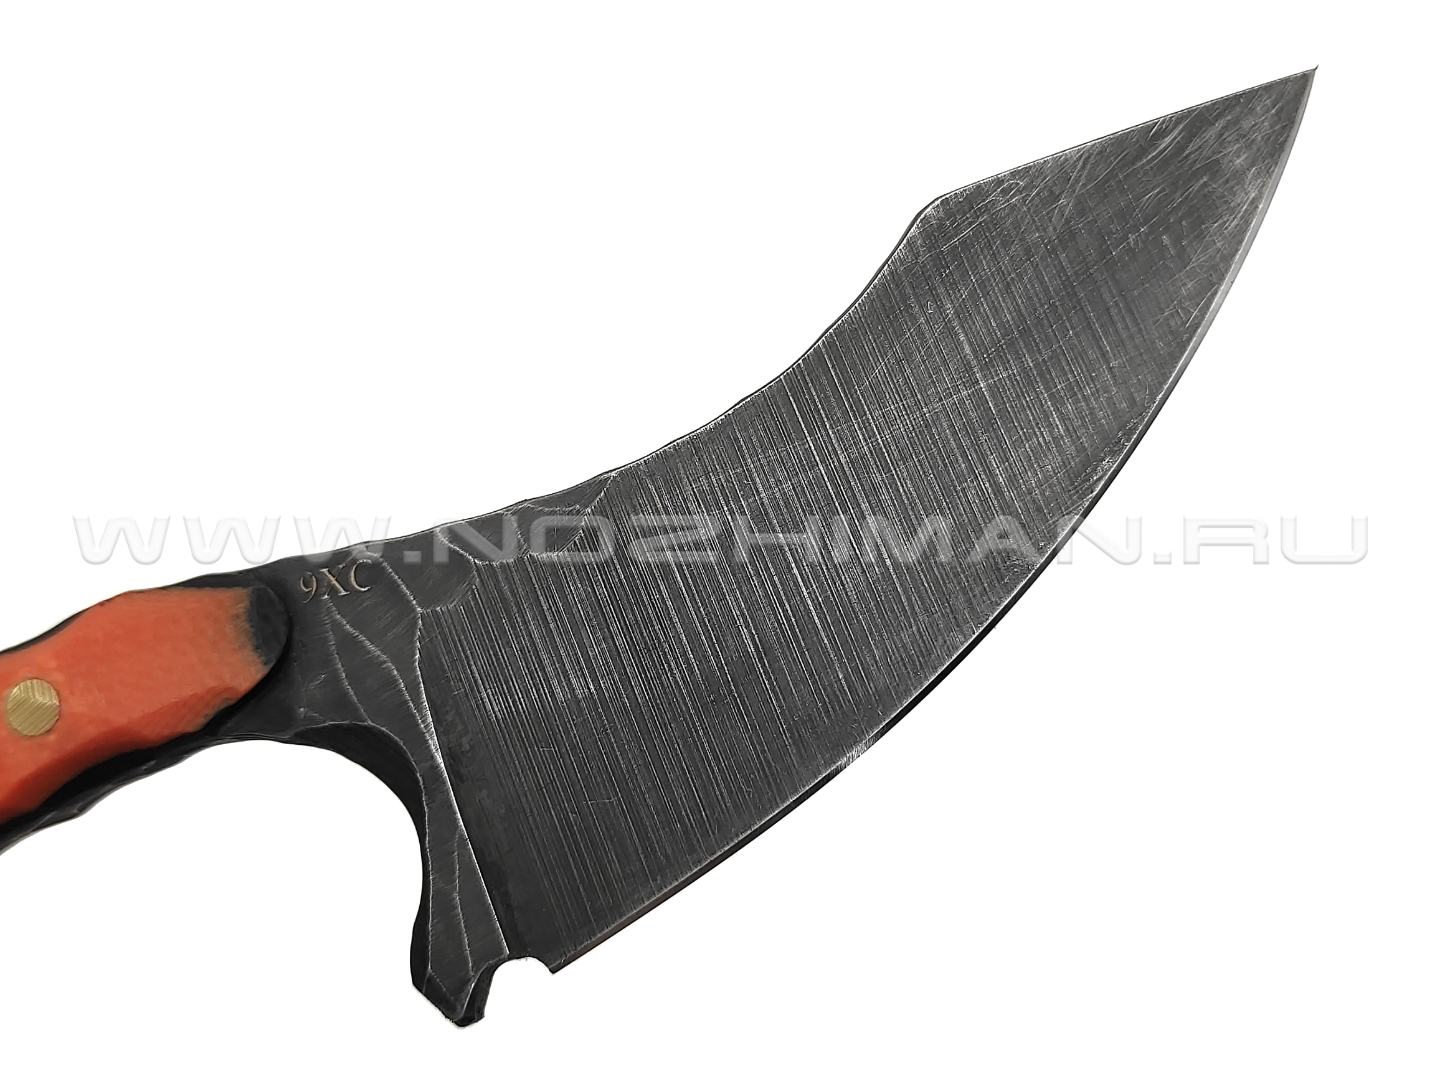 Андрей Кулаков нож KUL024 сталь 9ХС, рукоять G10 orange